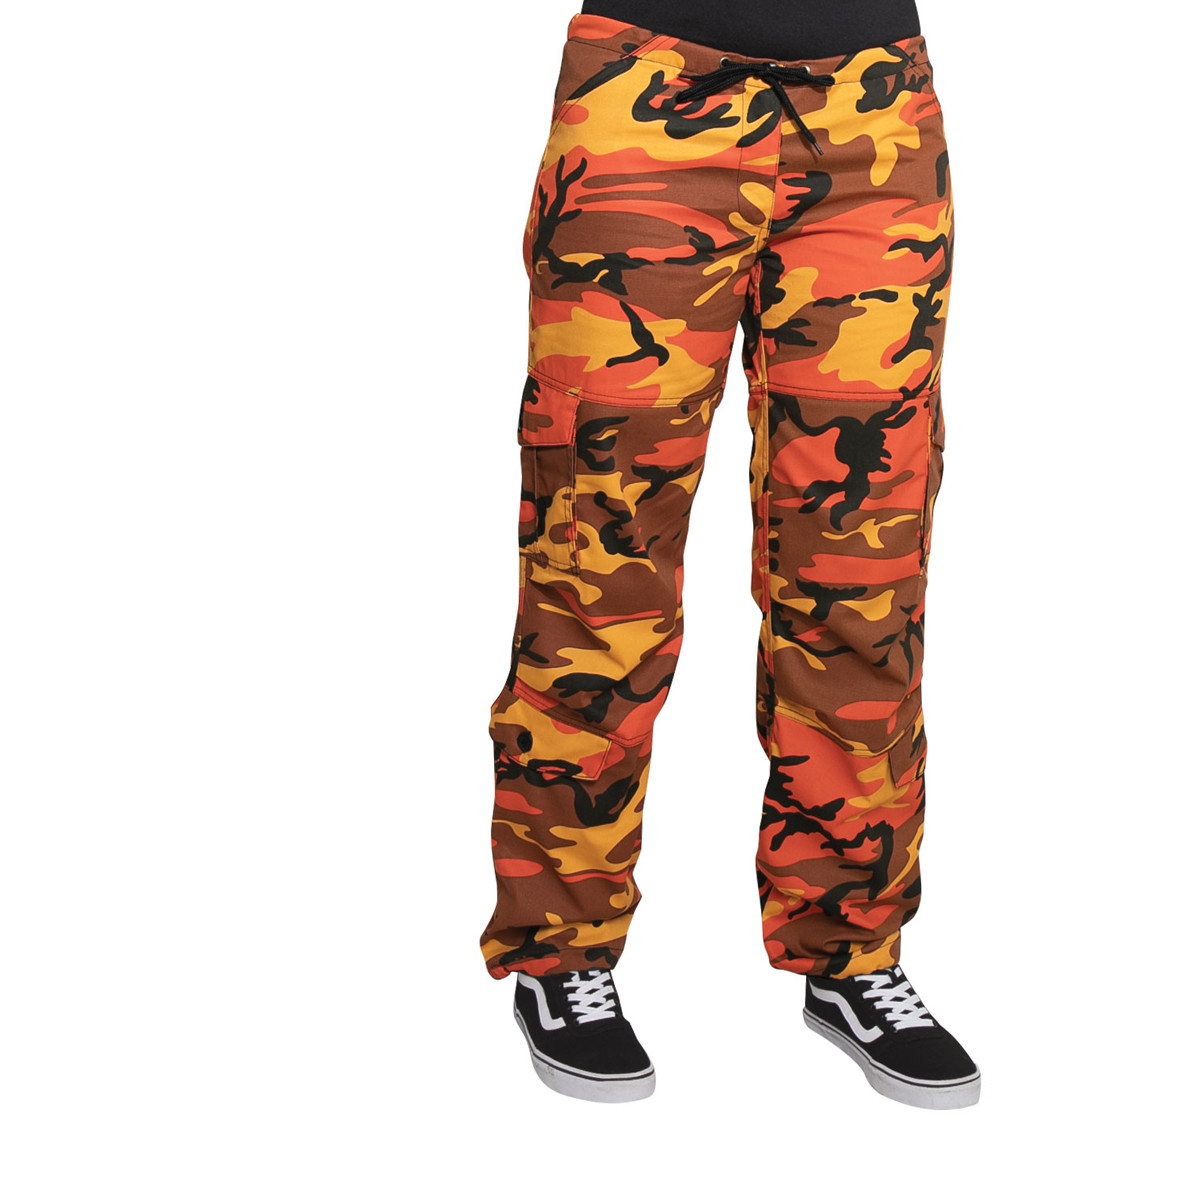 Shop Womens Orange Camo Fatigue Pants Fatigues Army Navy Gear